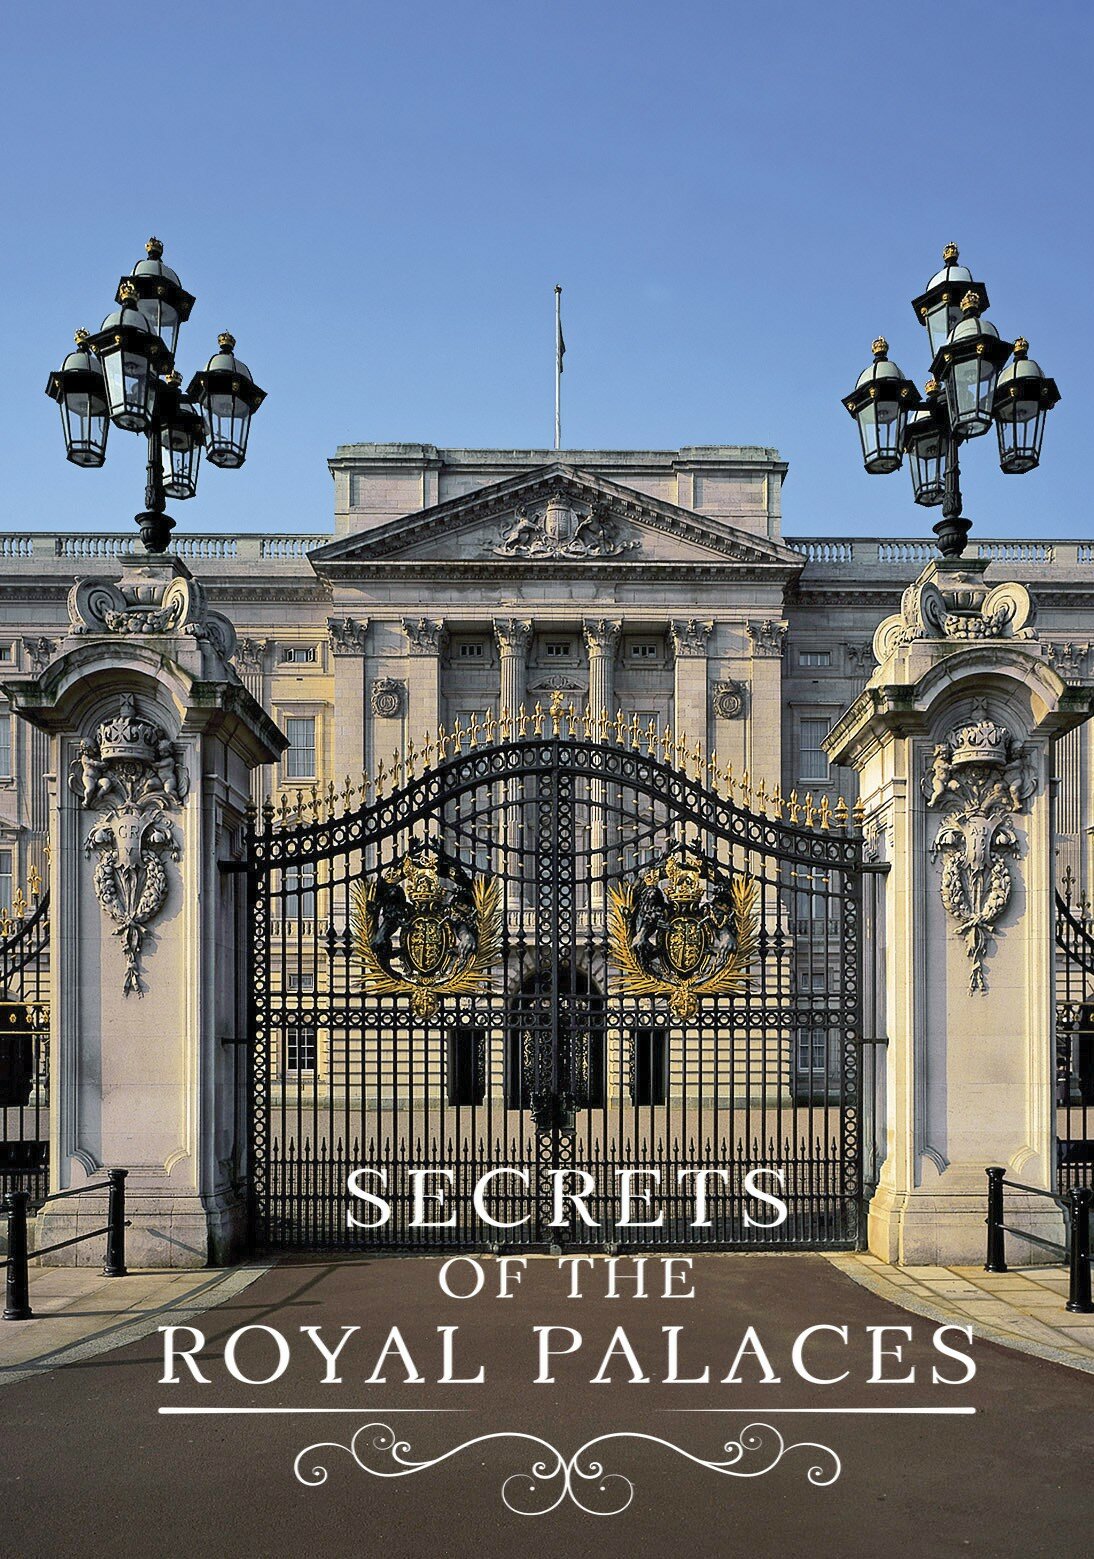 Secrets of the Royal Palaces ne zaman